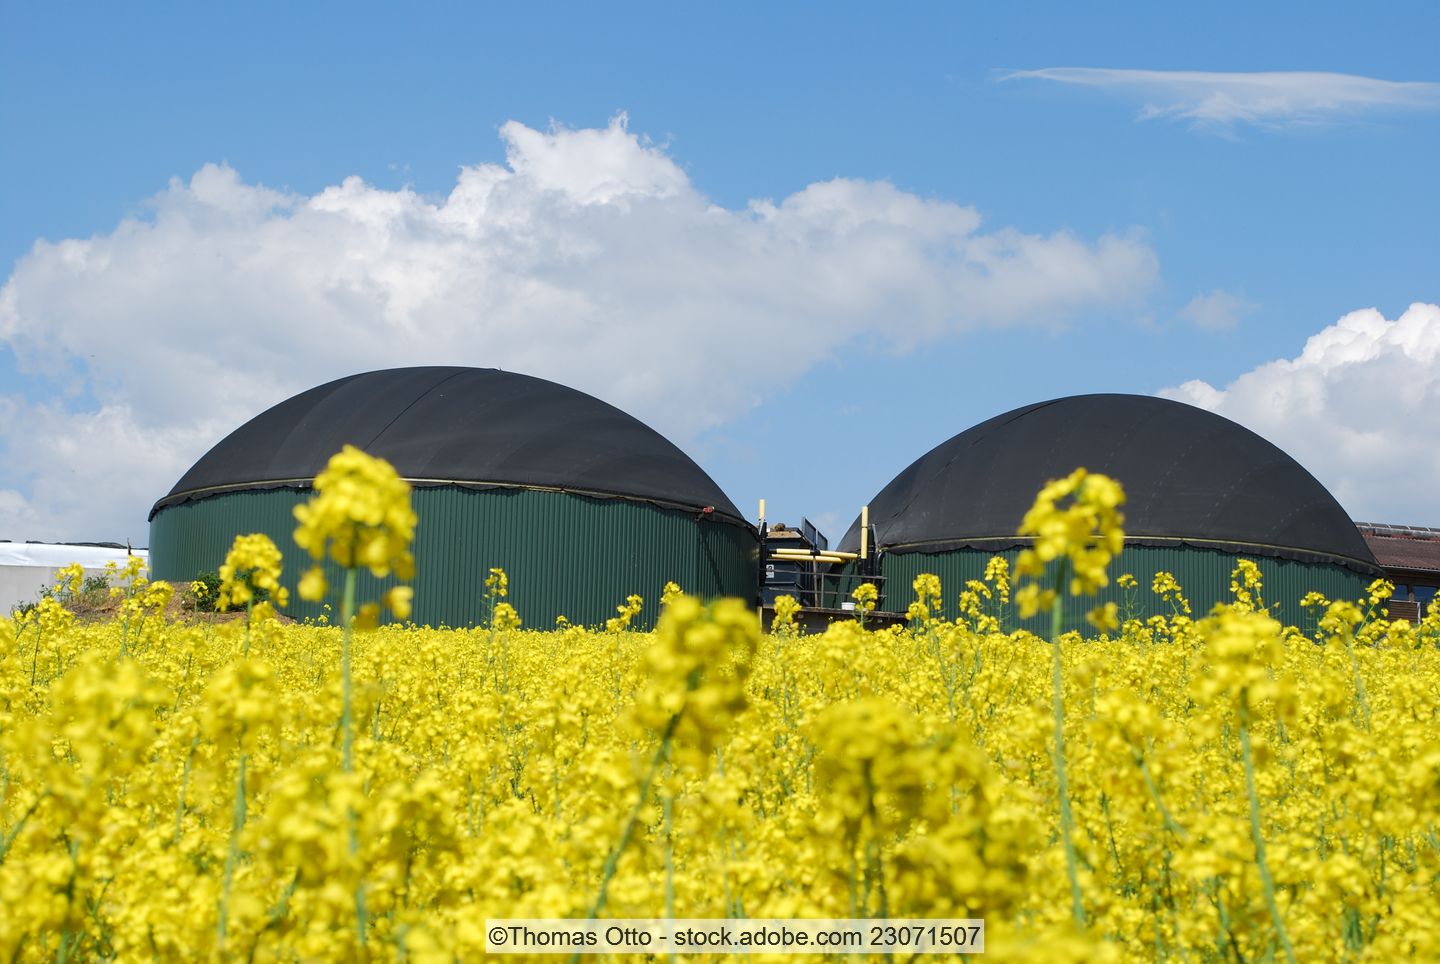 two biogas plants in a field